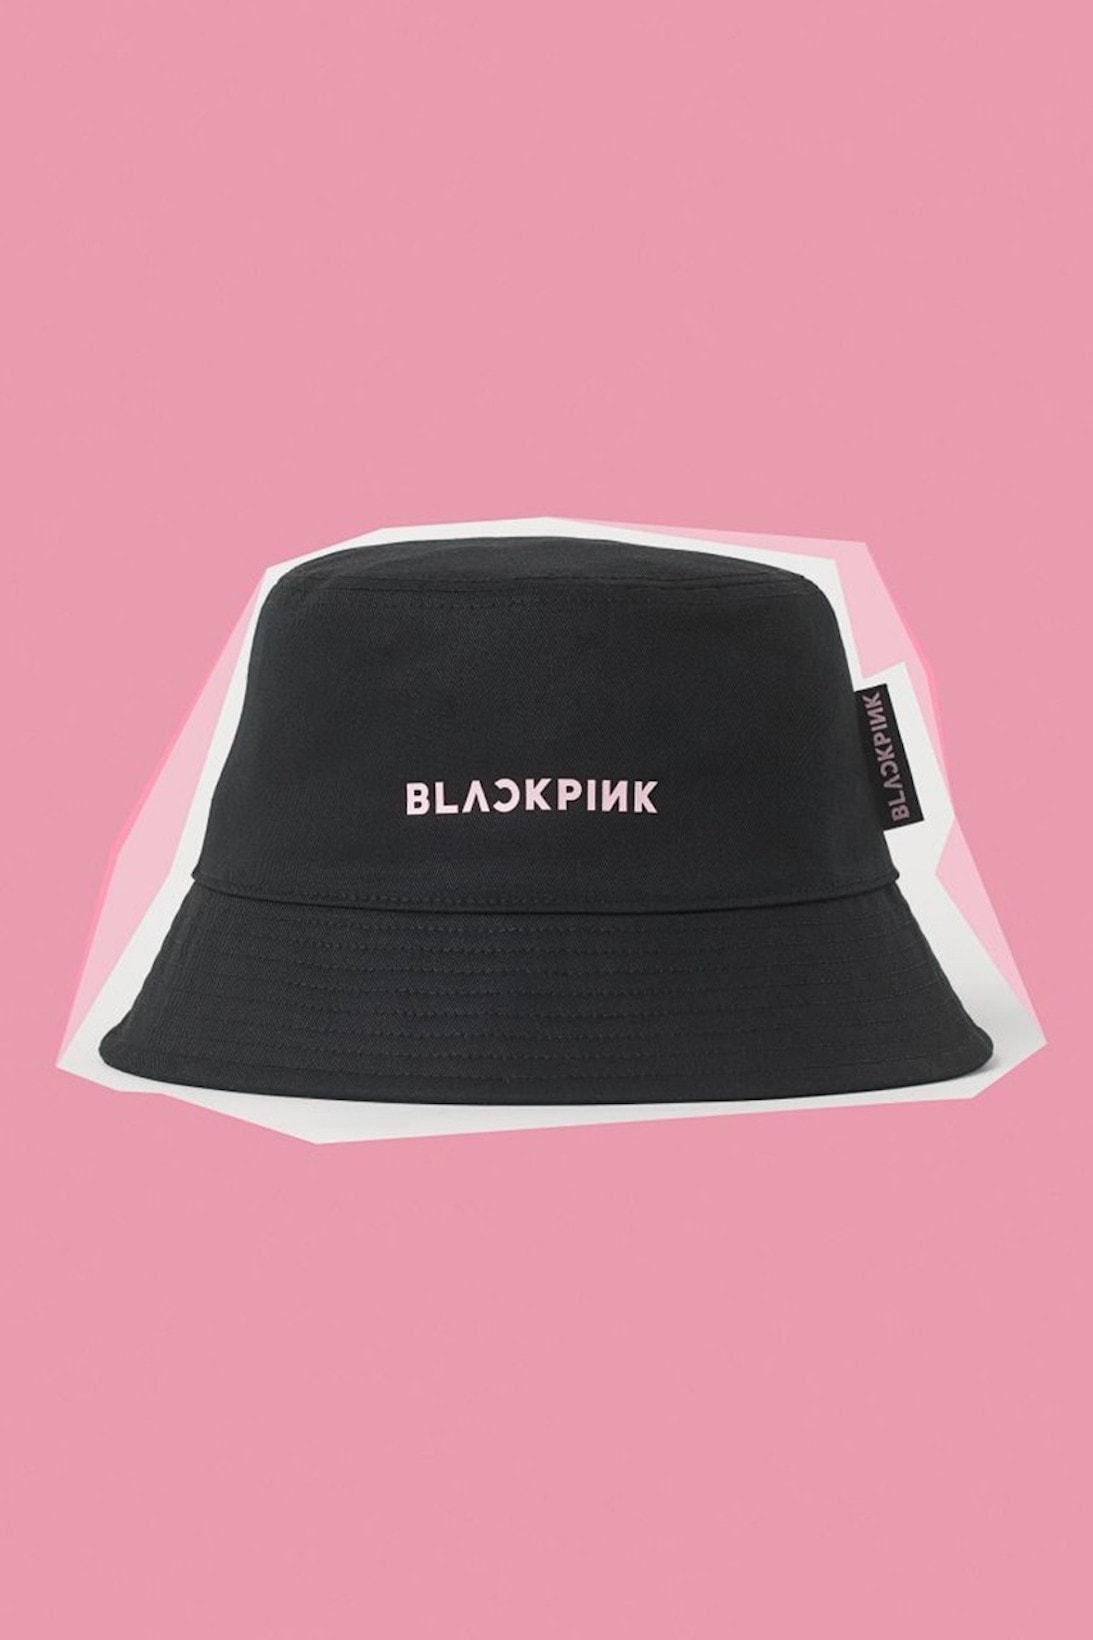 blackpink h&m collabration 2021 korea items where when release